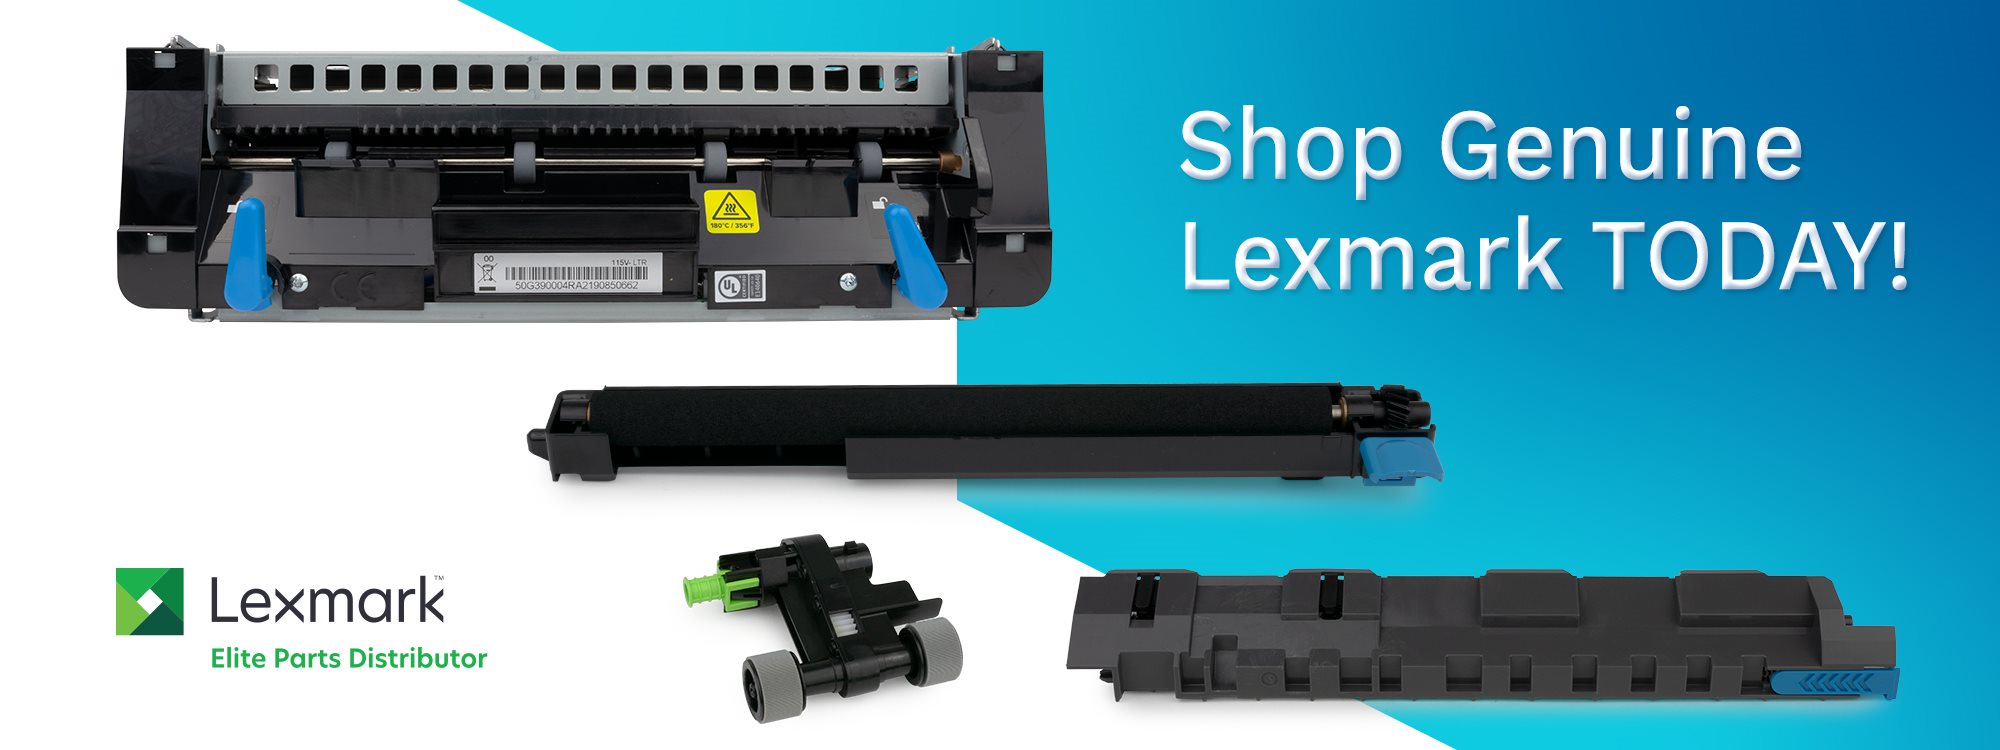 Genuine Lexmark Parts Guaranteed SHOP NOW